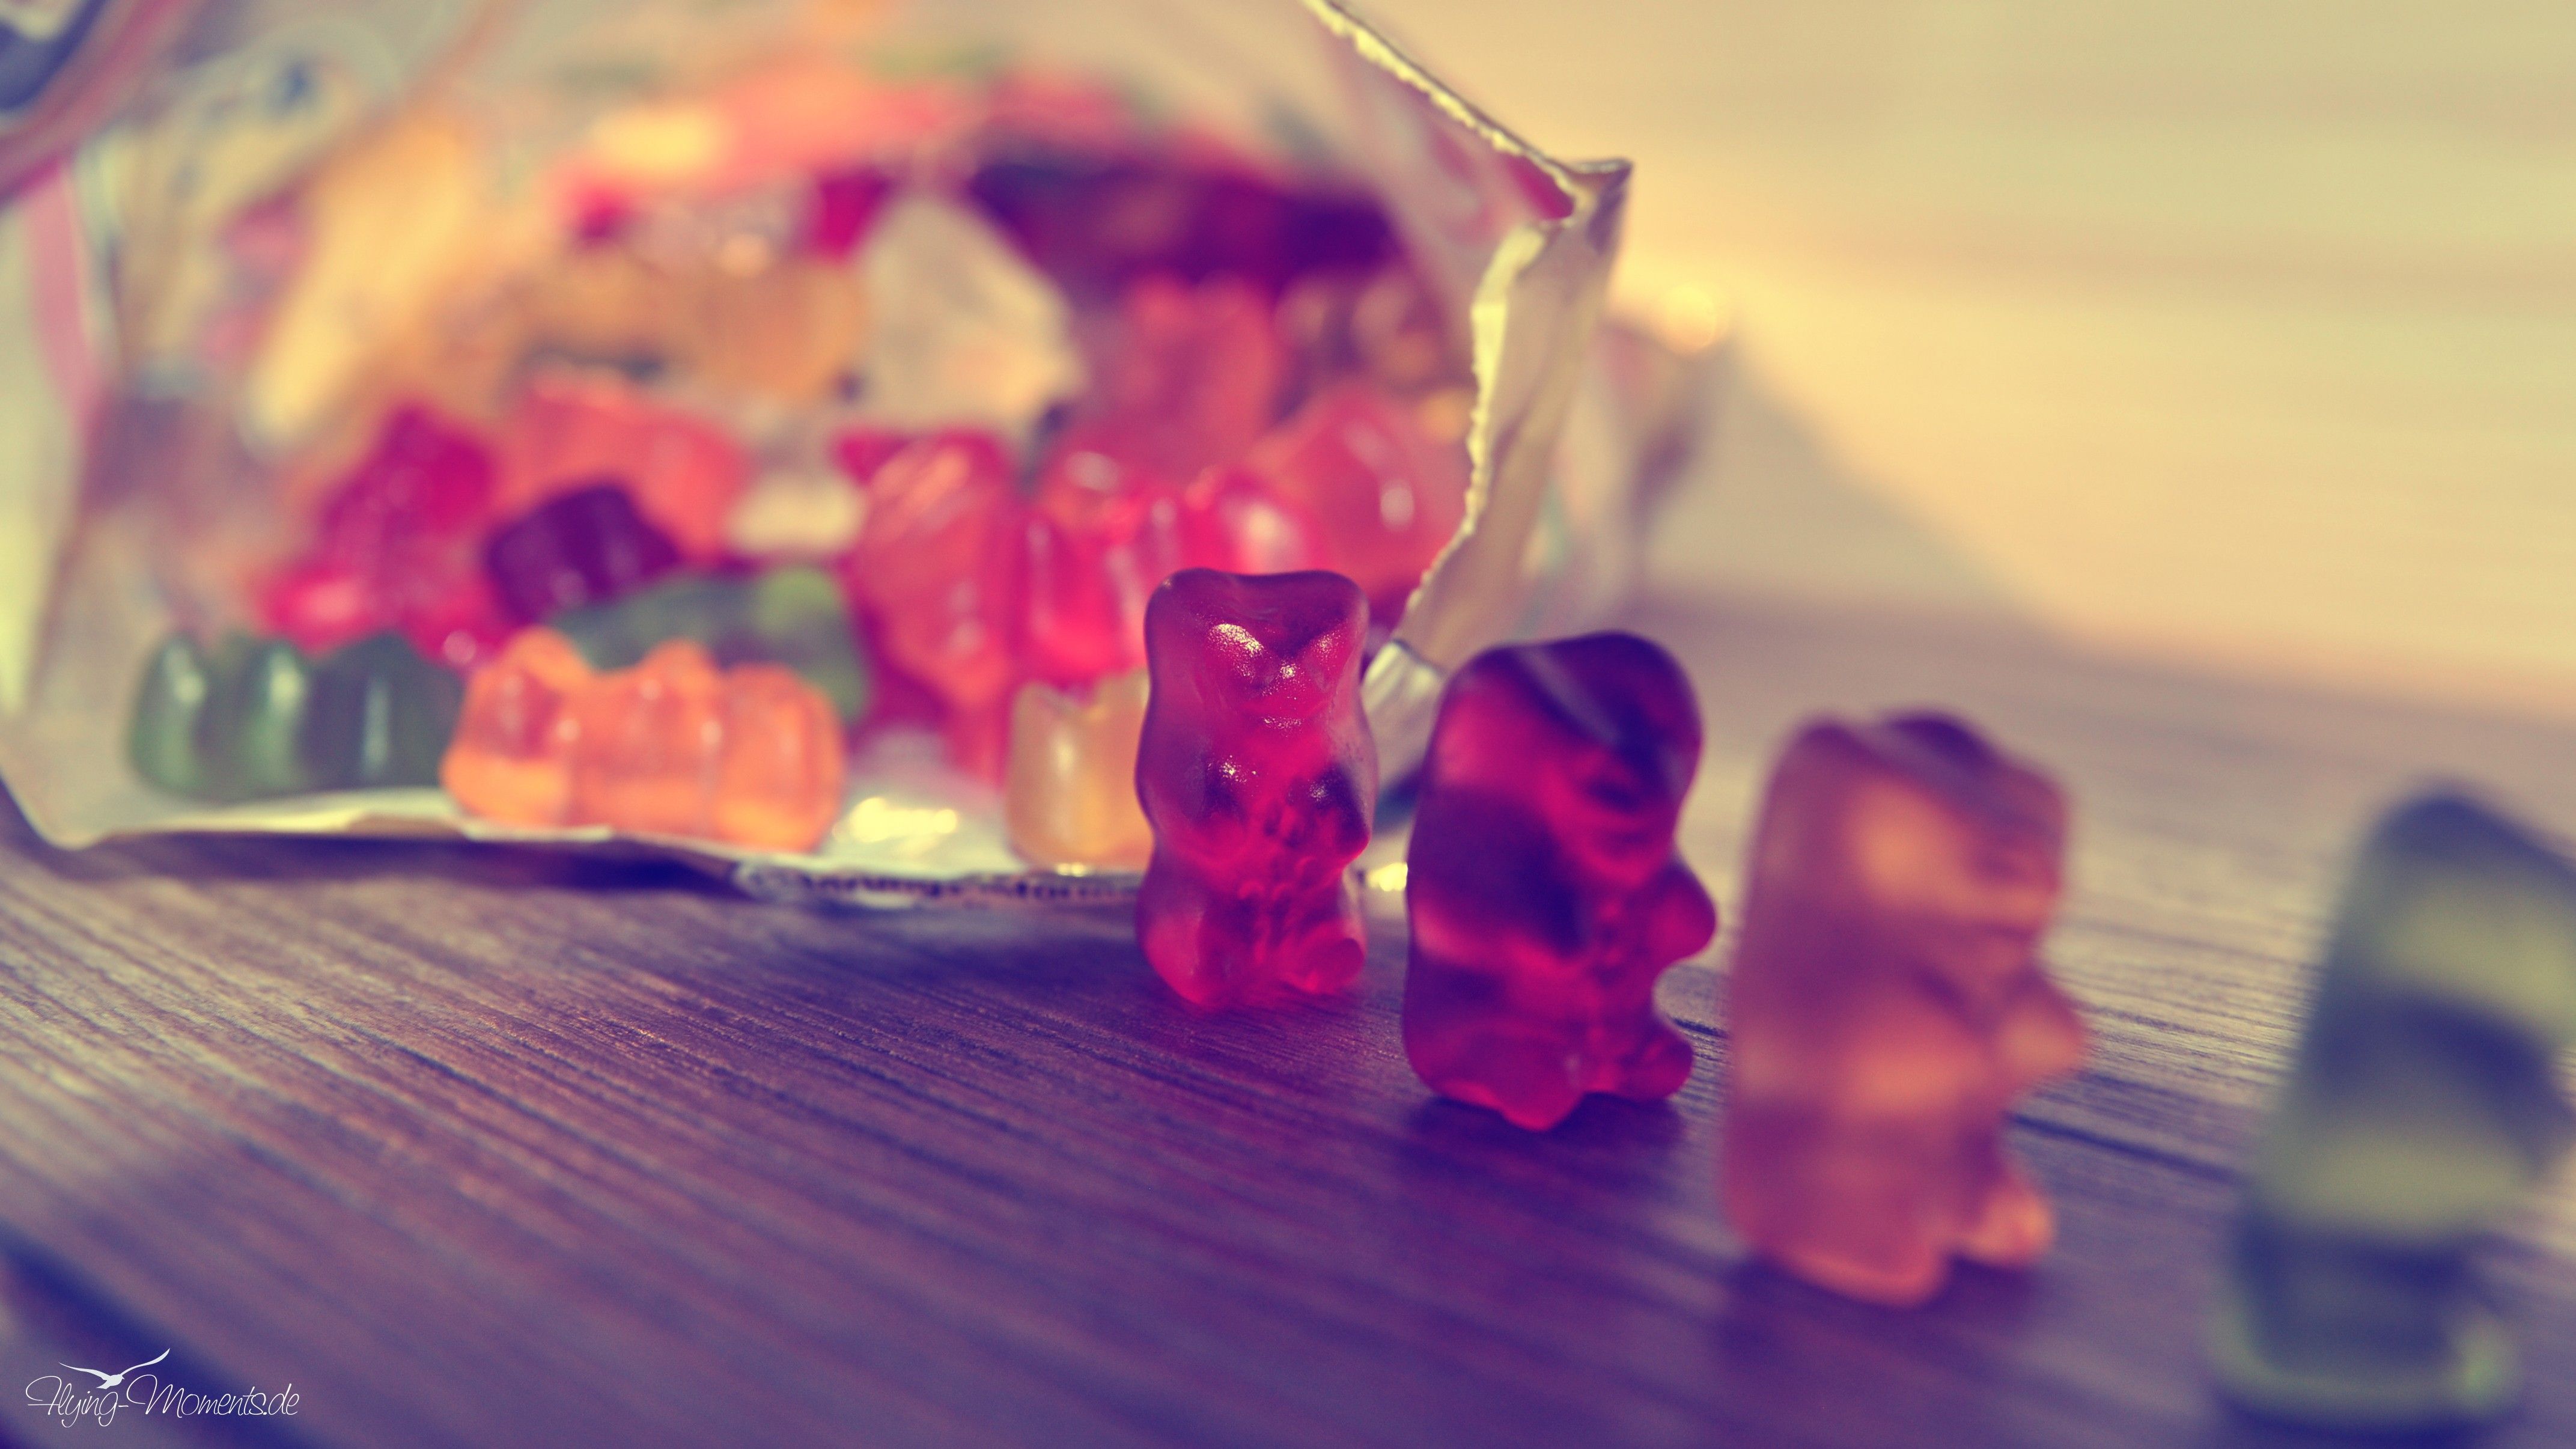 jelly sweets (candies) Gummy Bears bears Haribo jelly bears